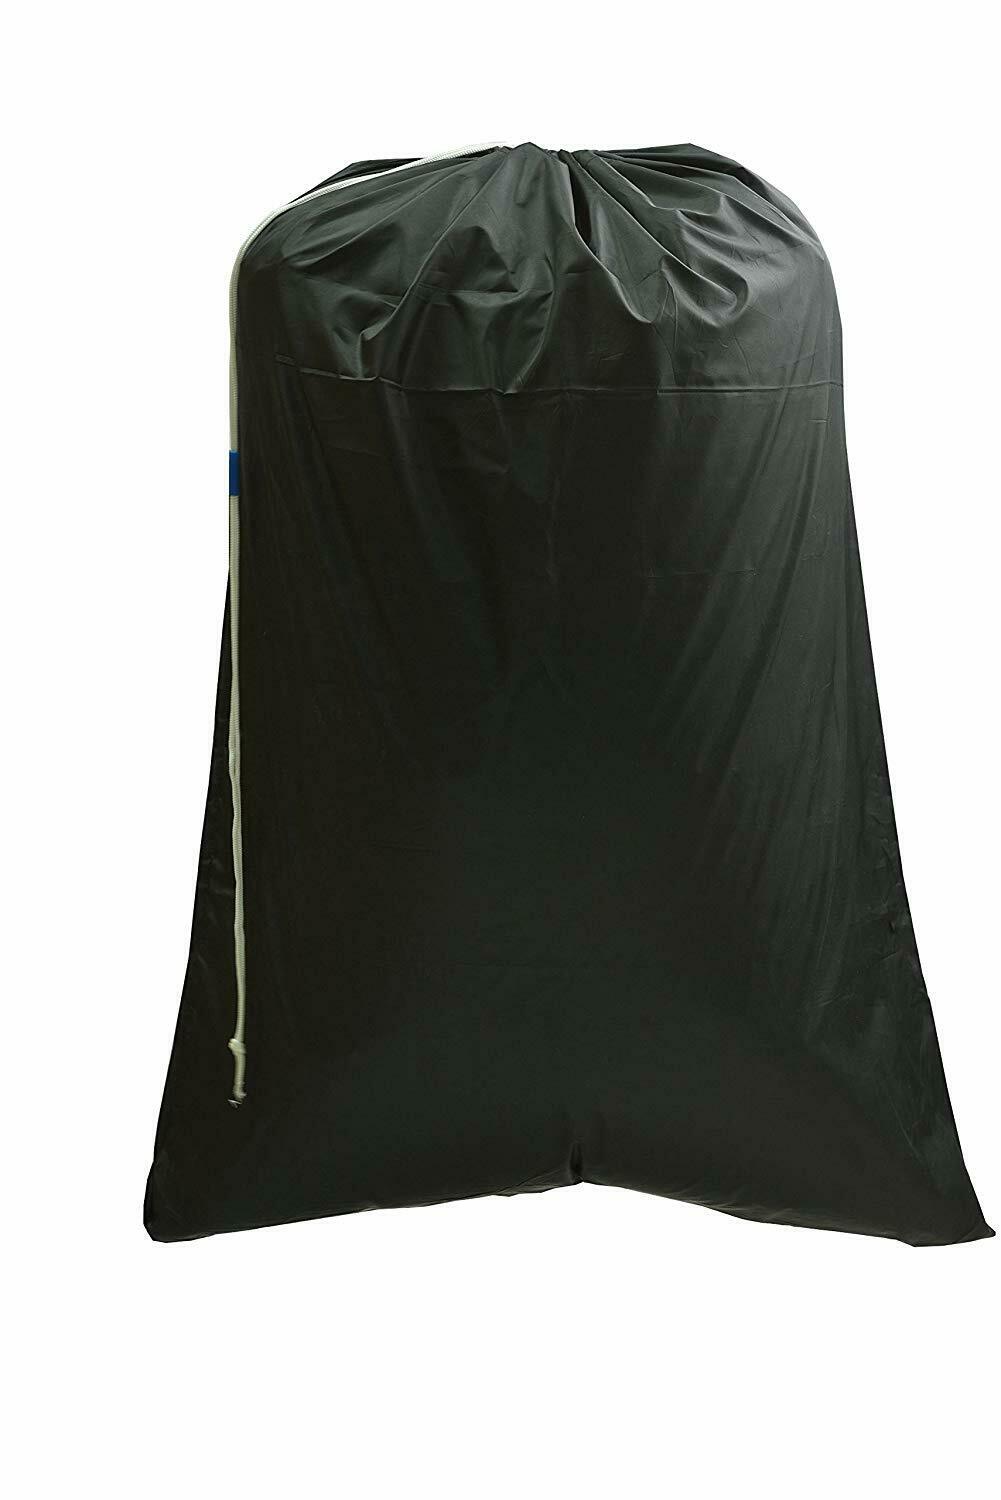 2 Pc New Large Black Laundry Bag 30"x40", 50 Lb Capacity,